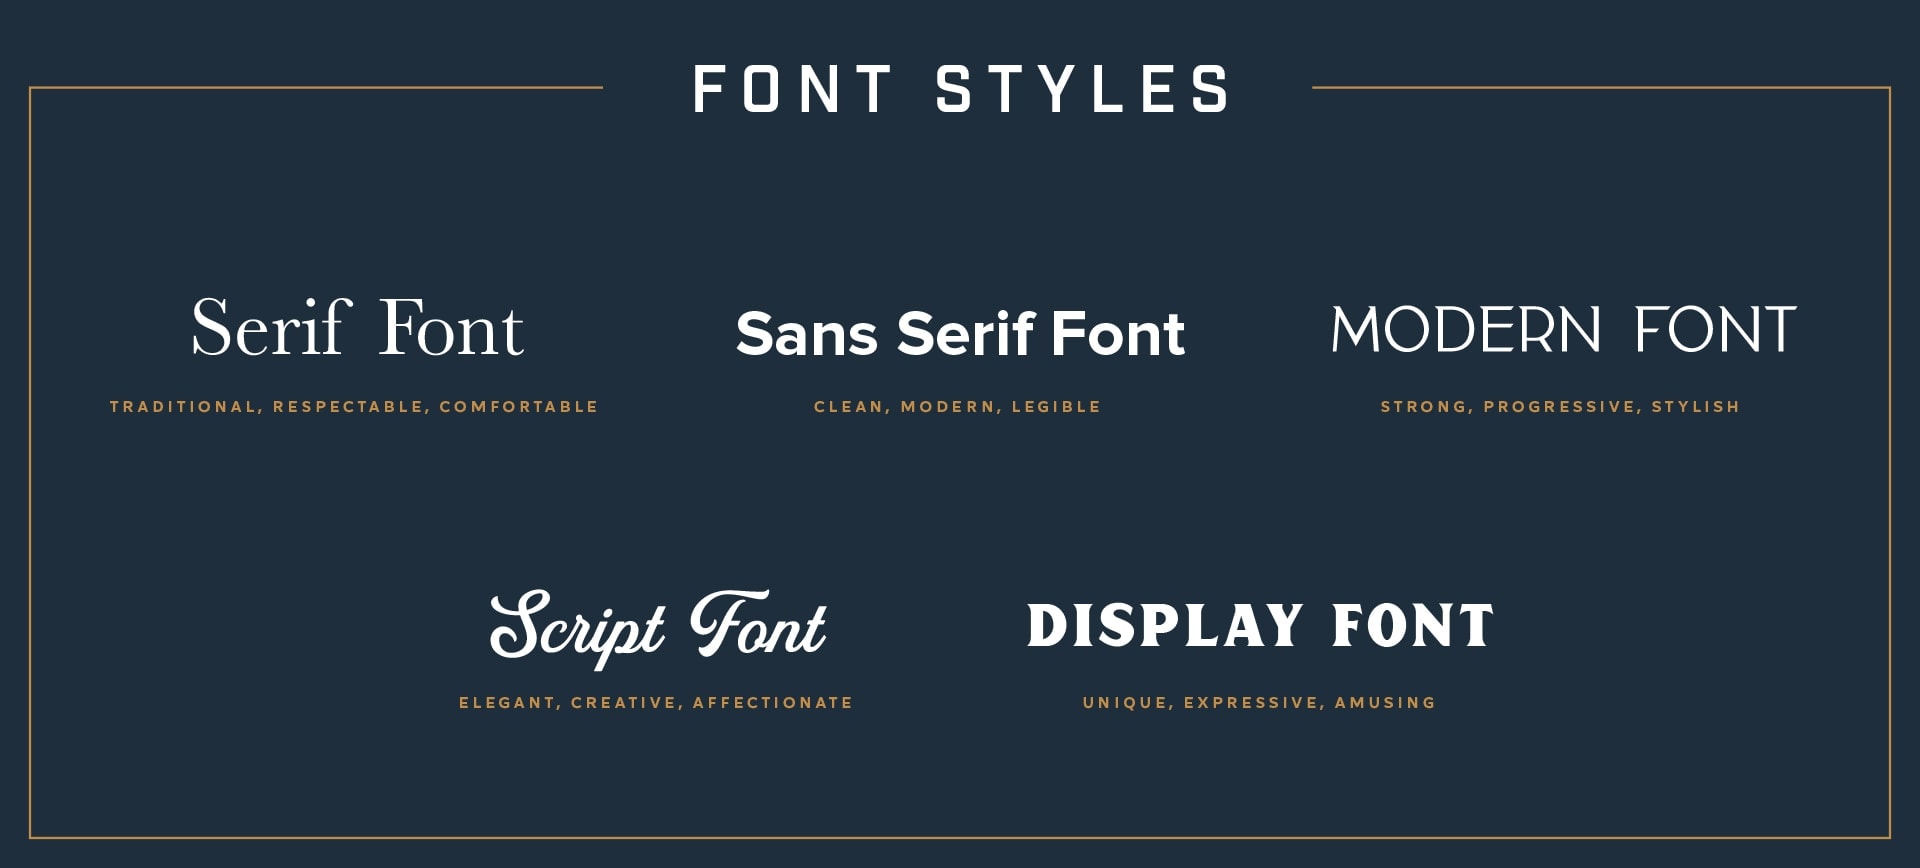 Typographic styles in Multi-family Branding